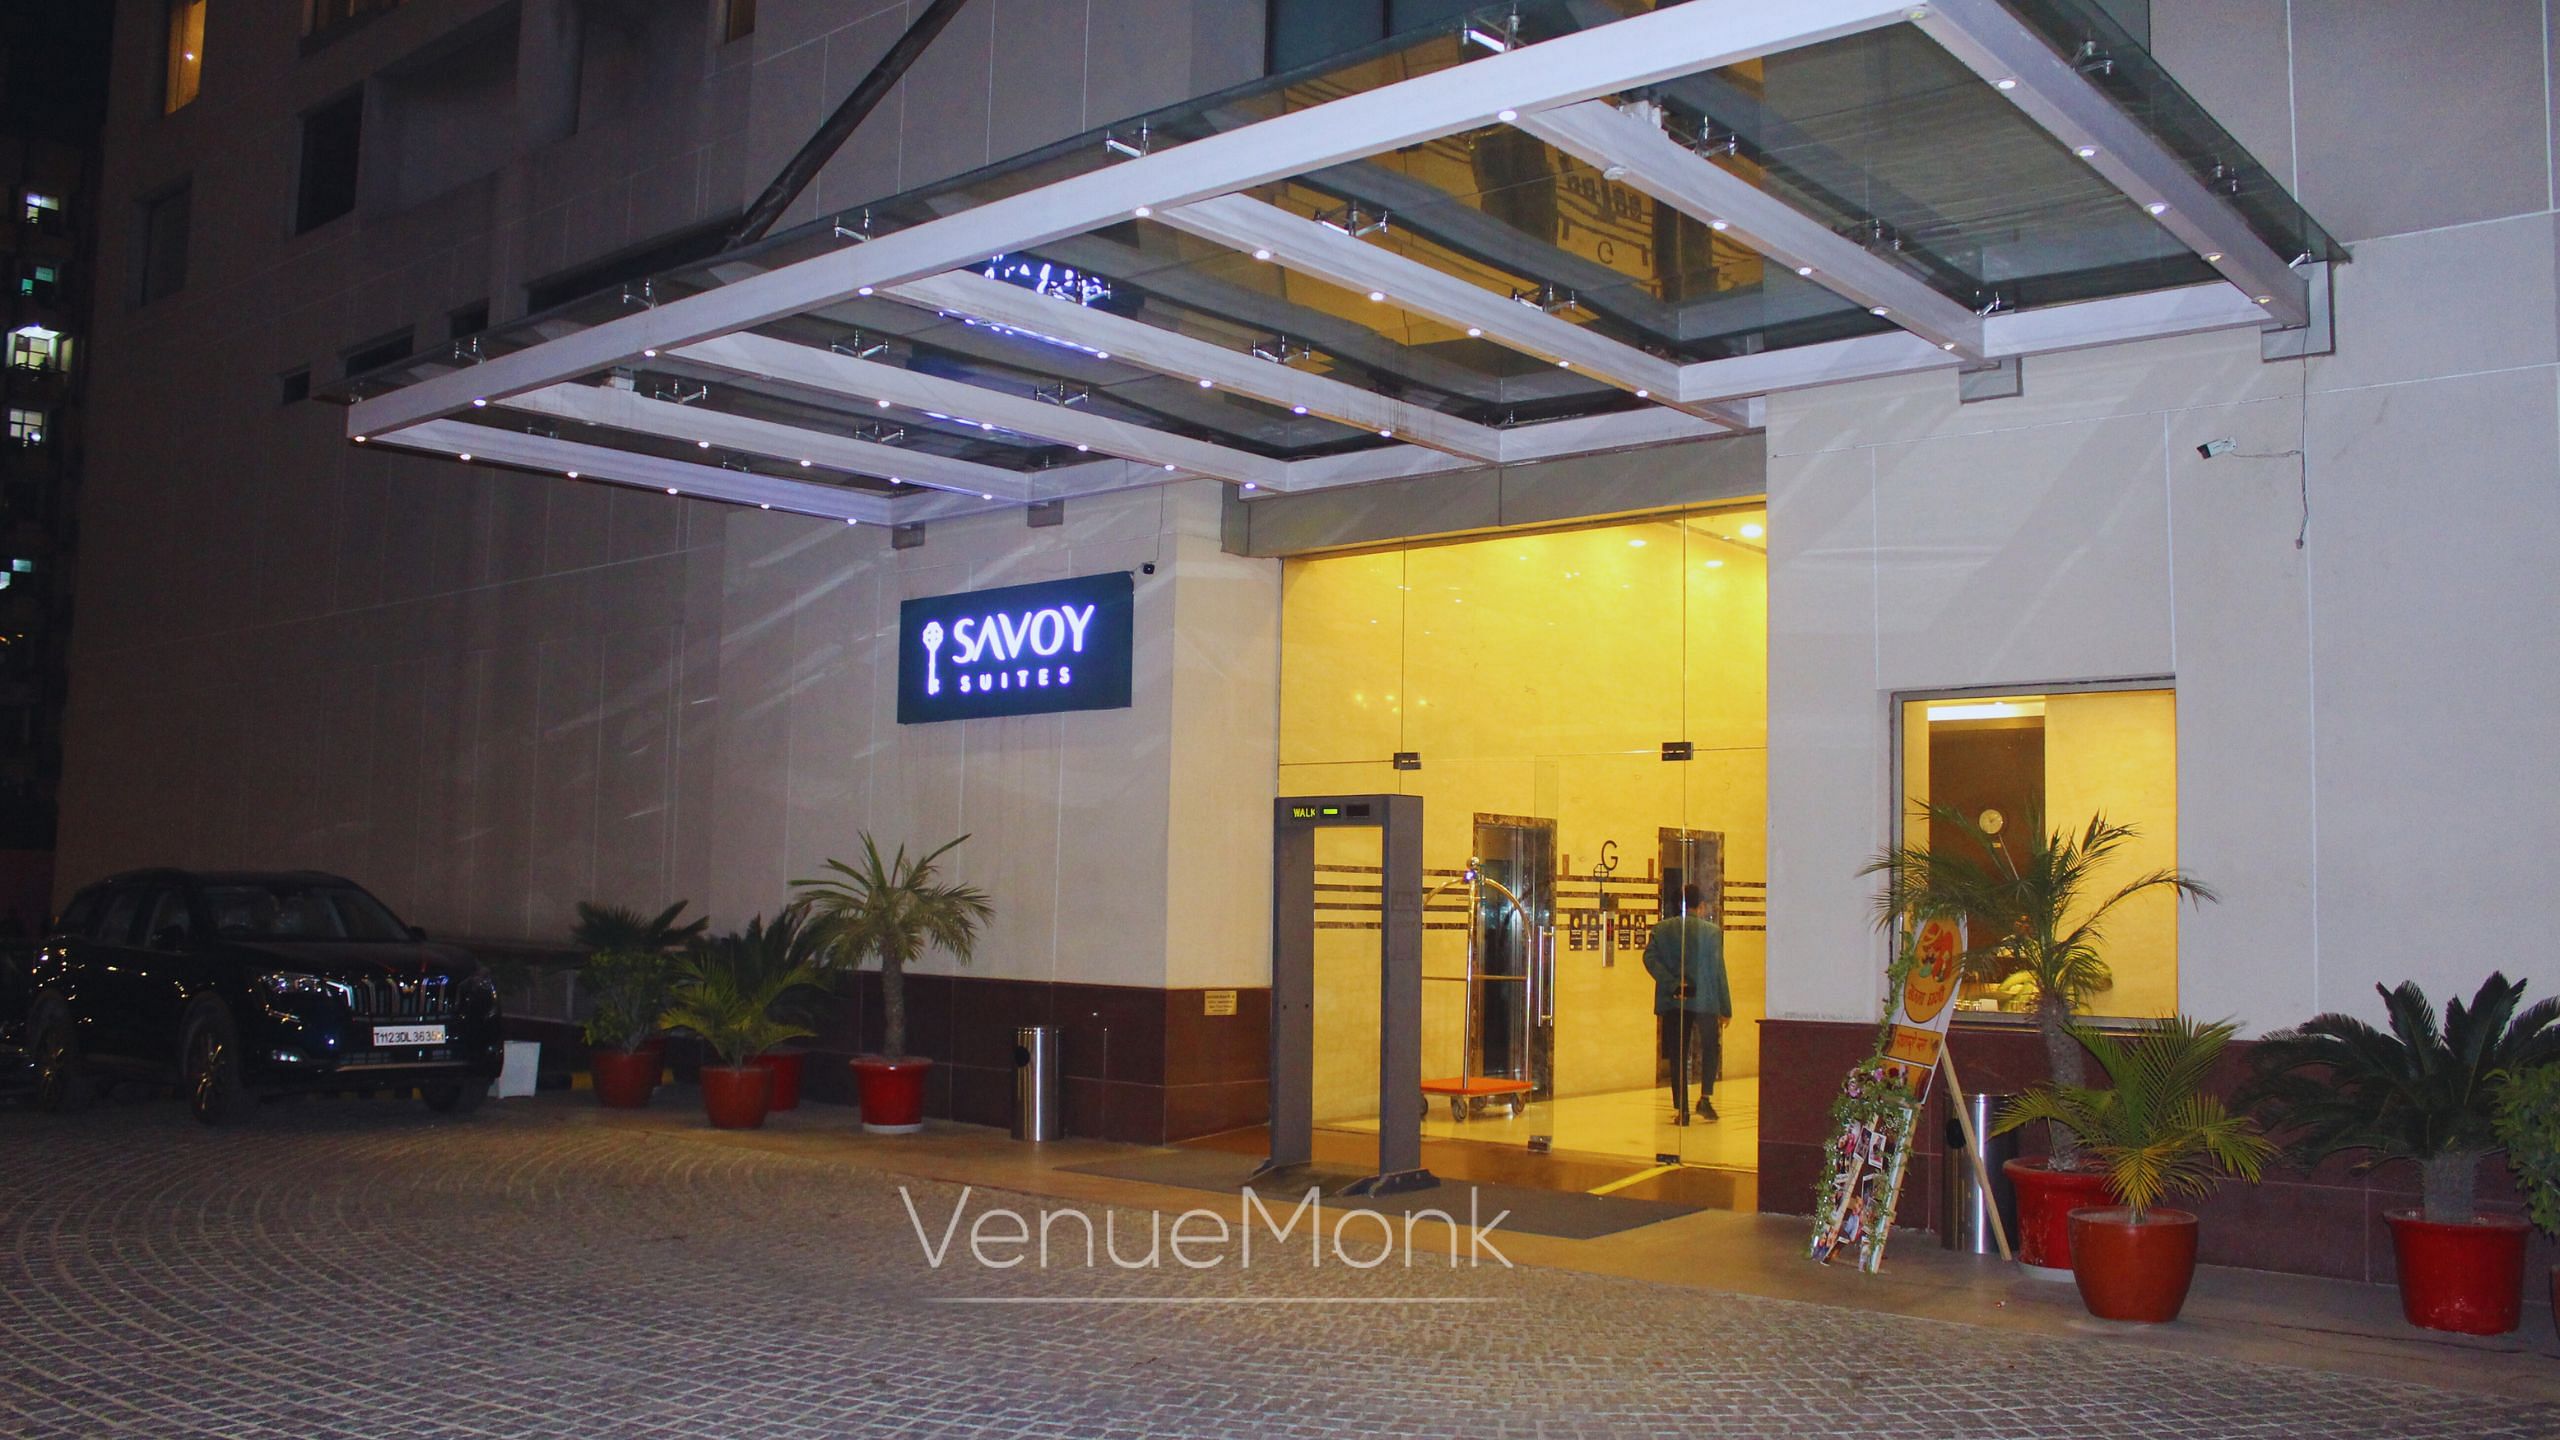 Savoy Suites in Manesar, Gurgaon